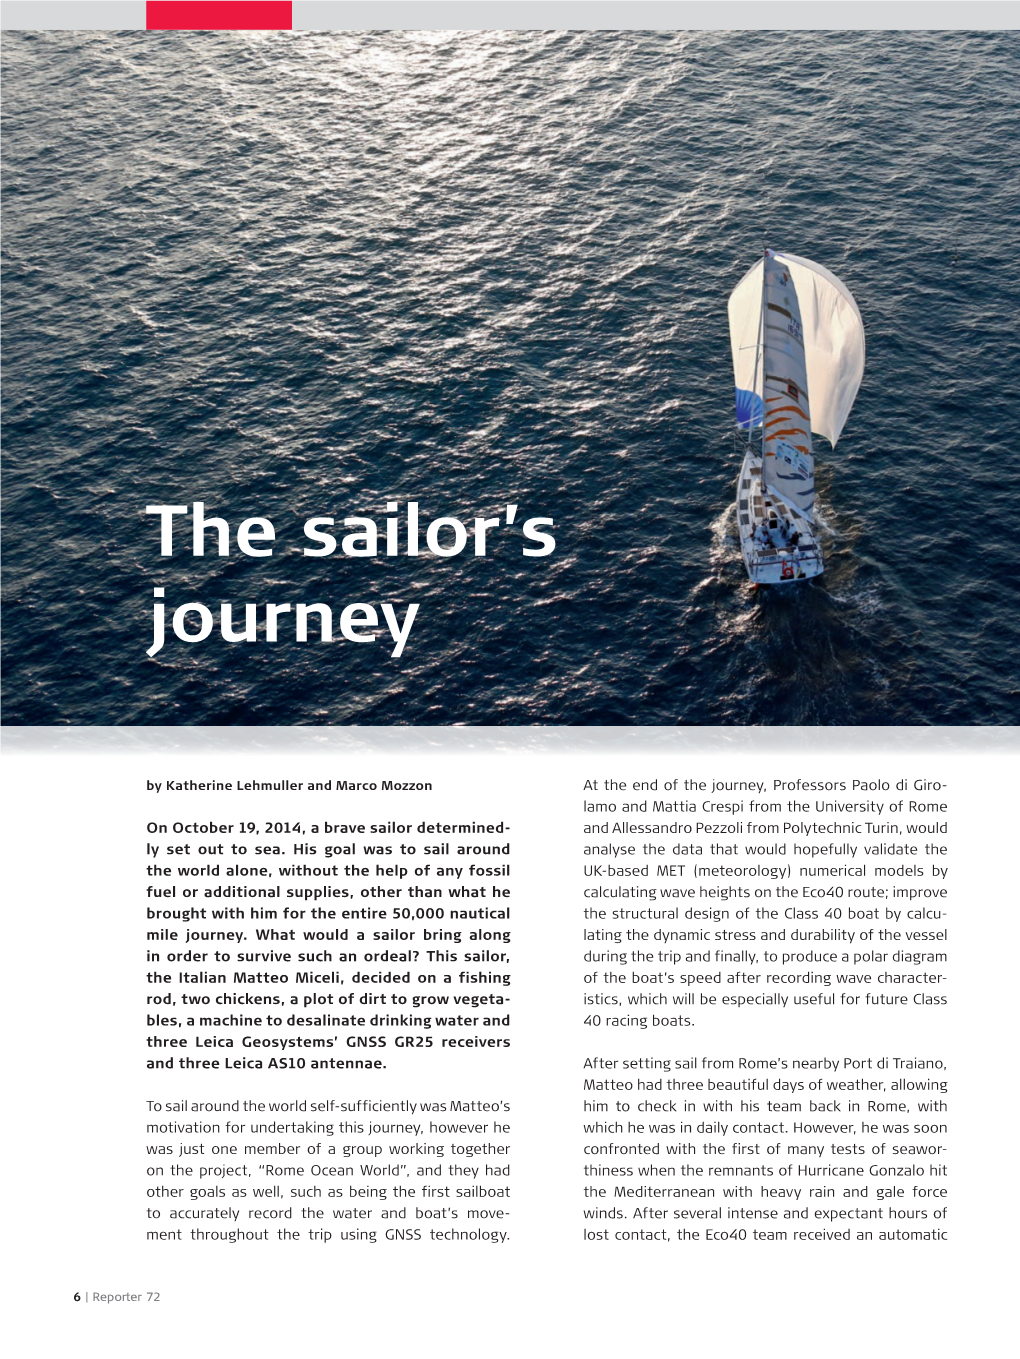 The Sailor's Journey